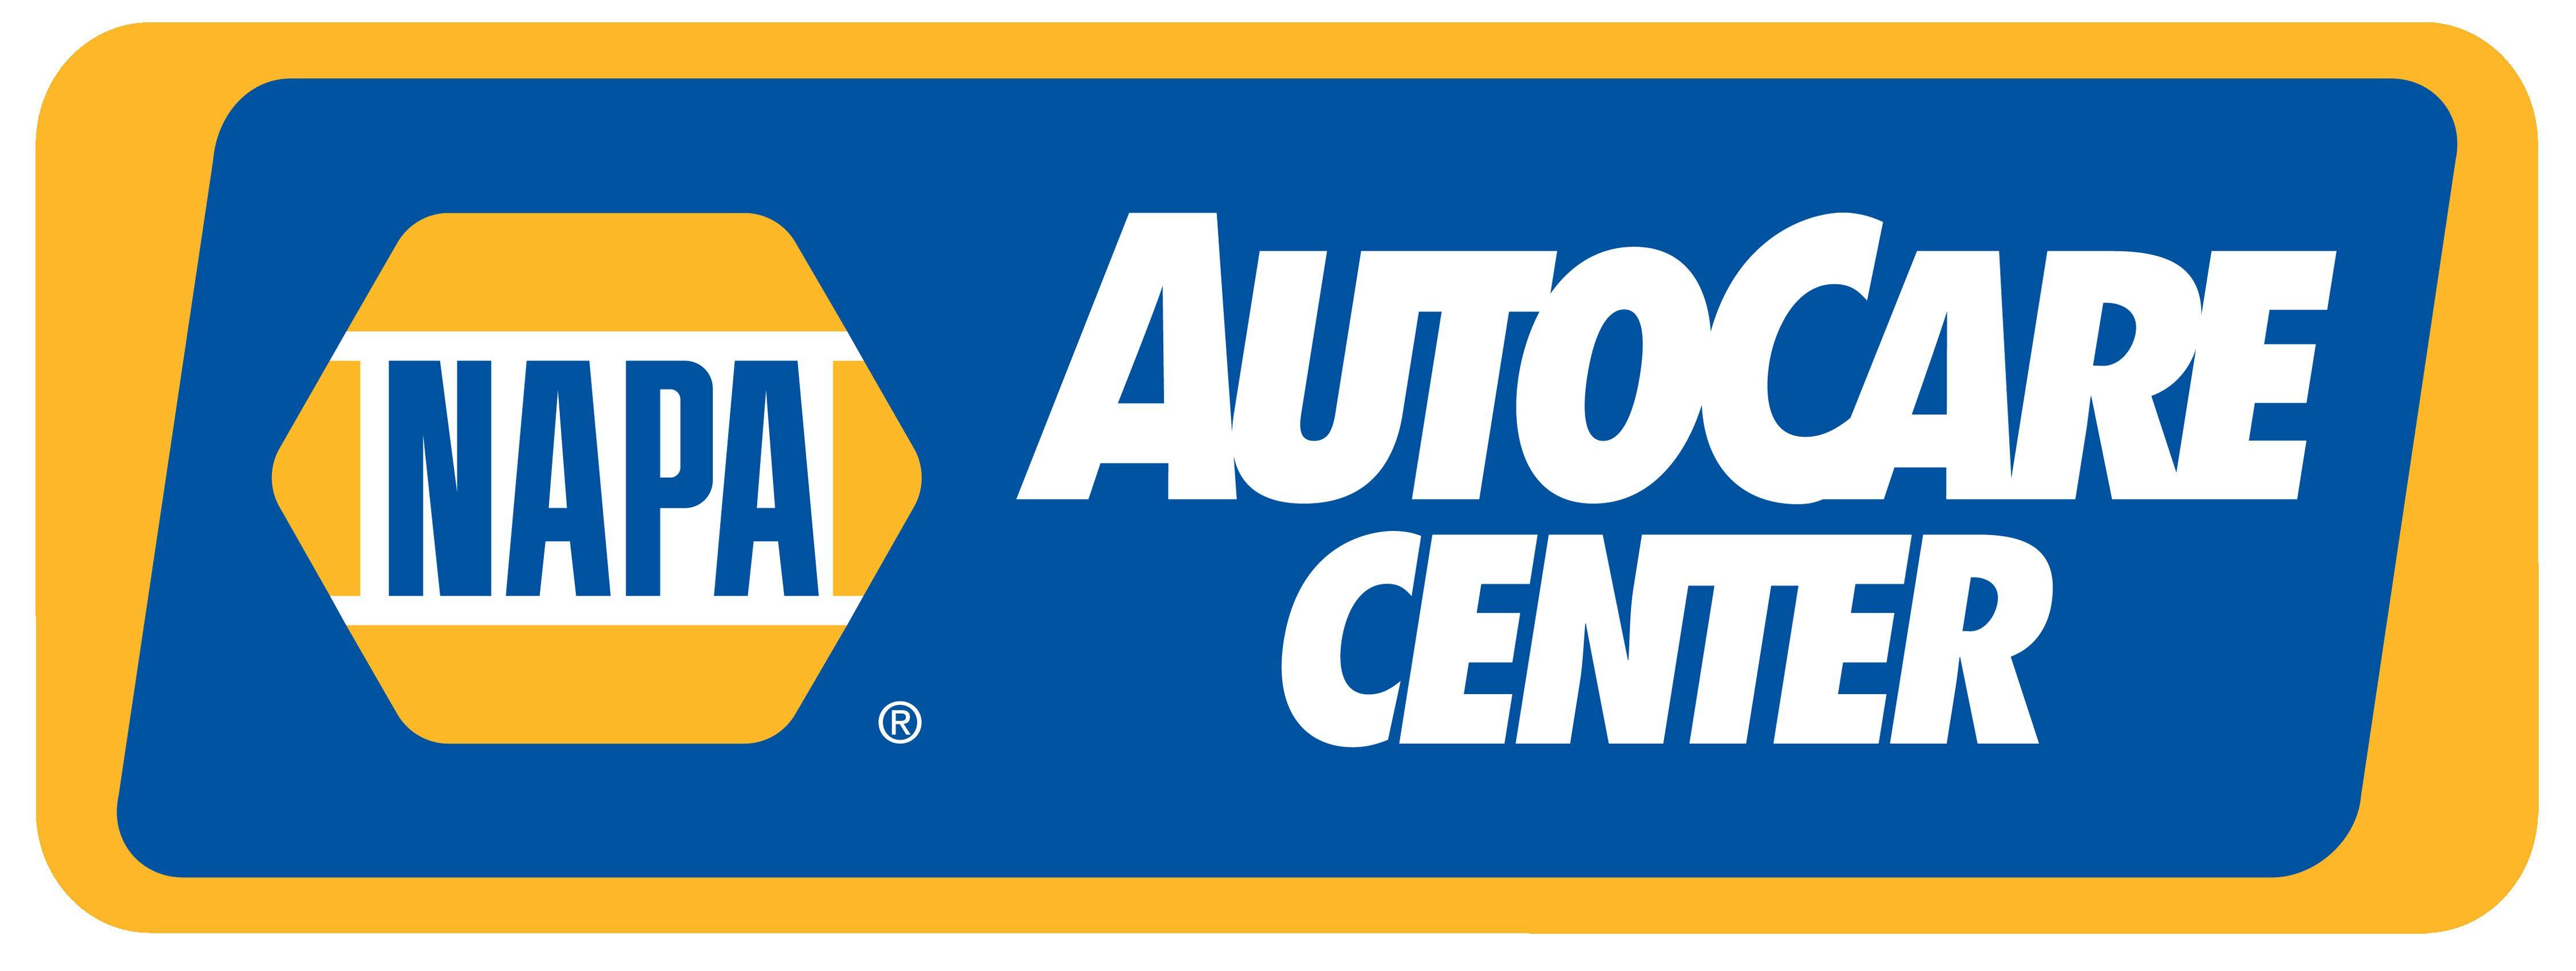 Automotive Service Center Logo - Used Car Specials | Auto Parts Deals | Service Coupons in Kansas City